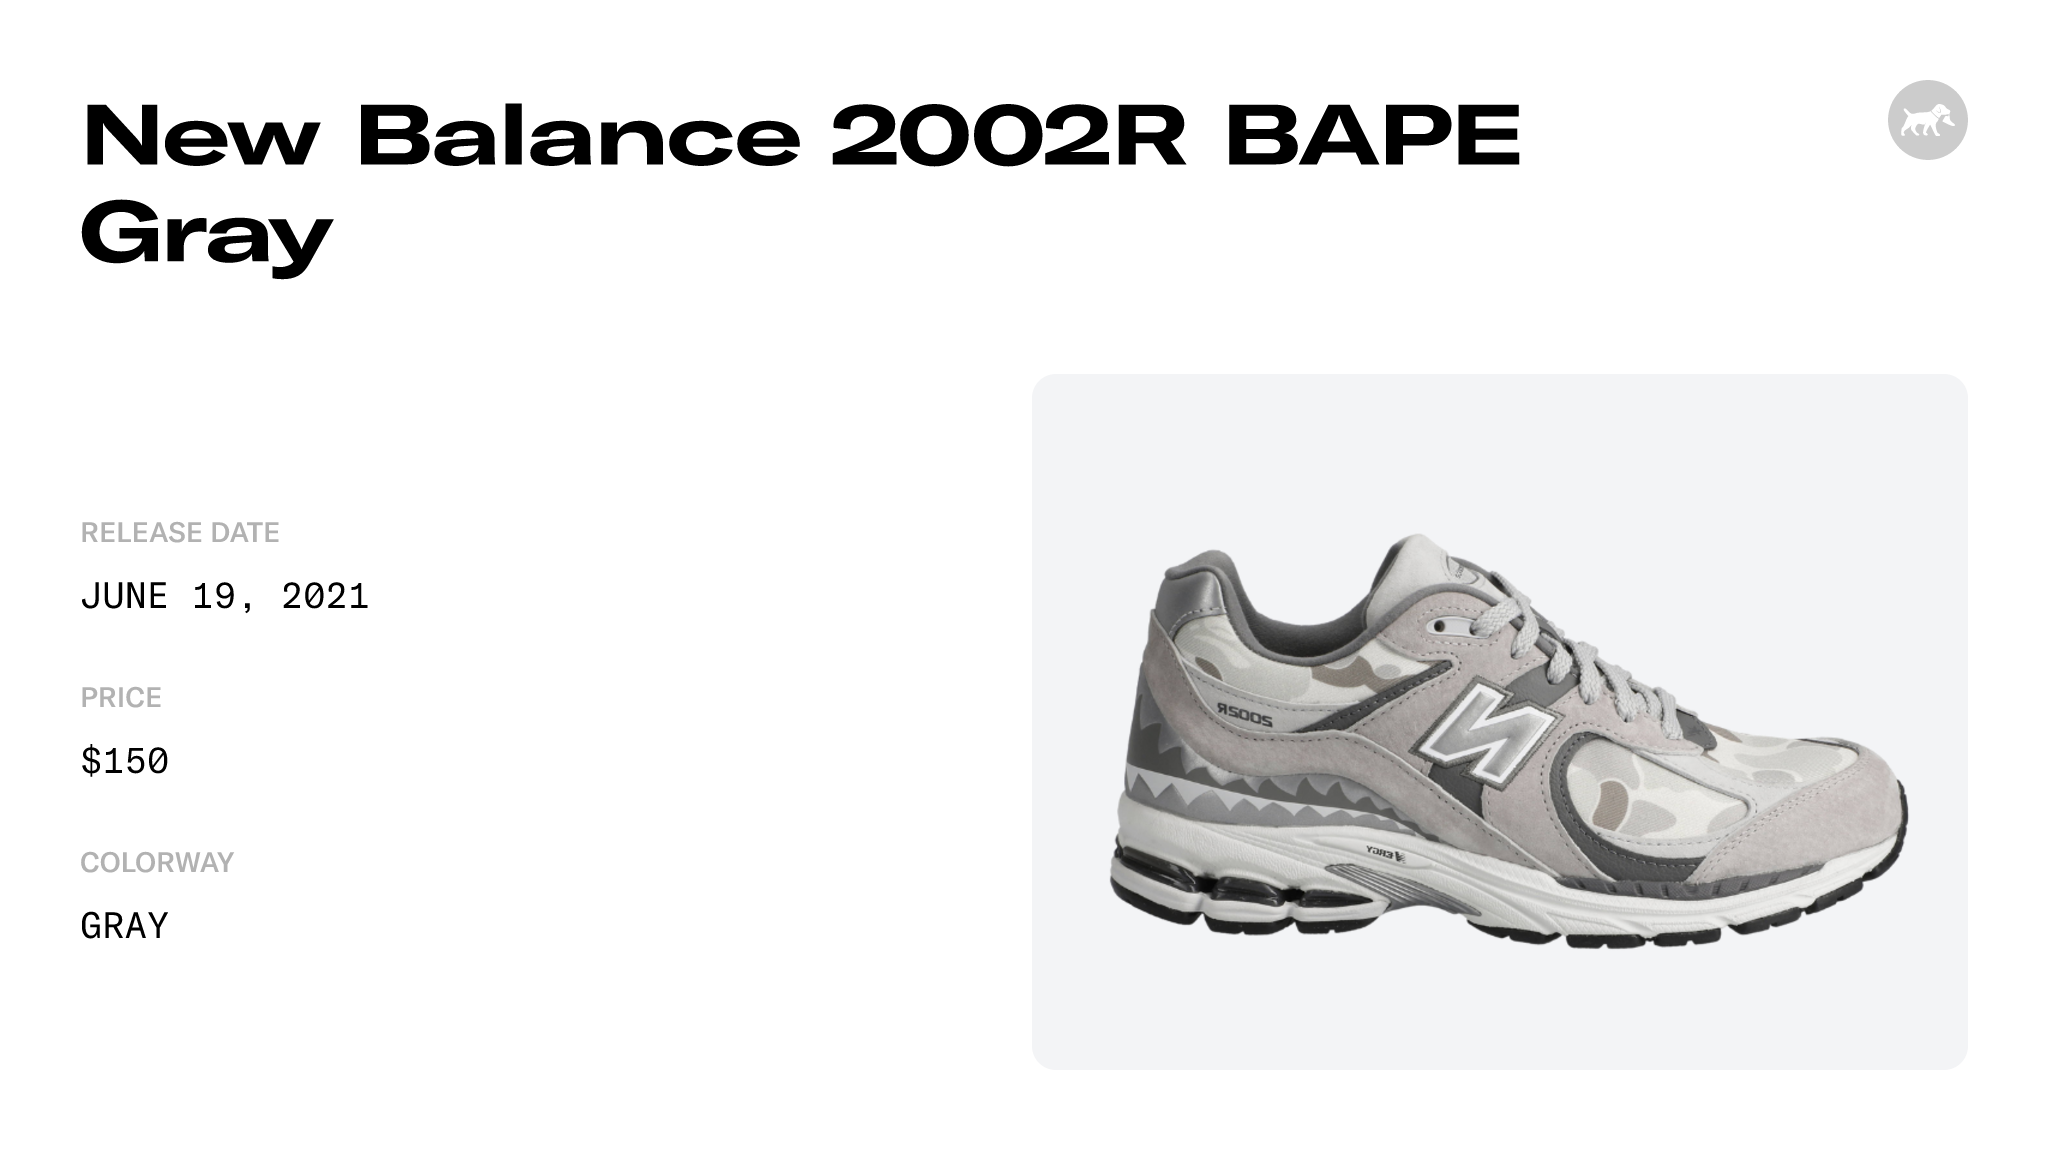 New Balance 2002R BAPE Gray - NB2002RG Raffles and Release Date